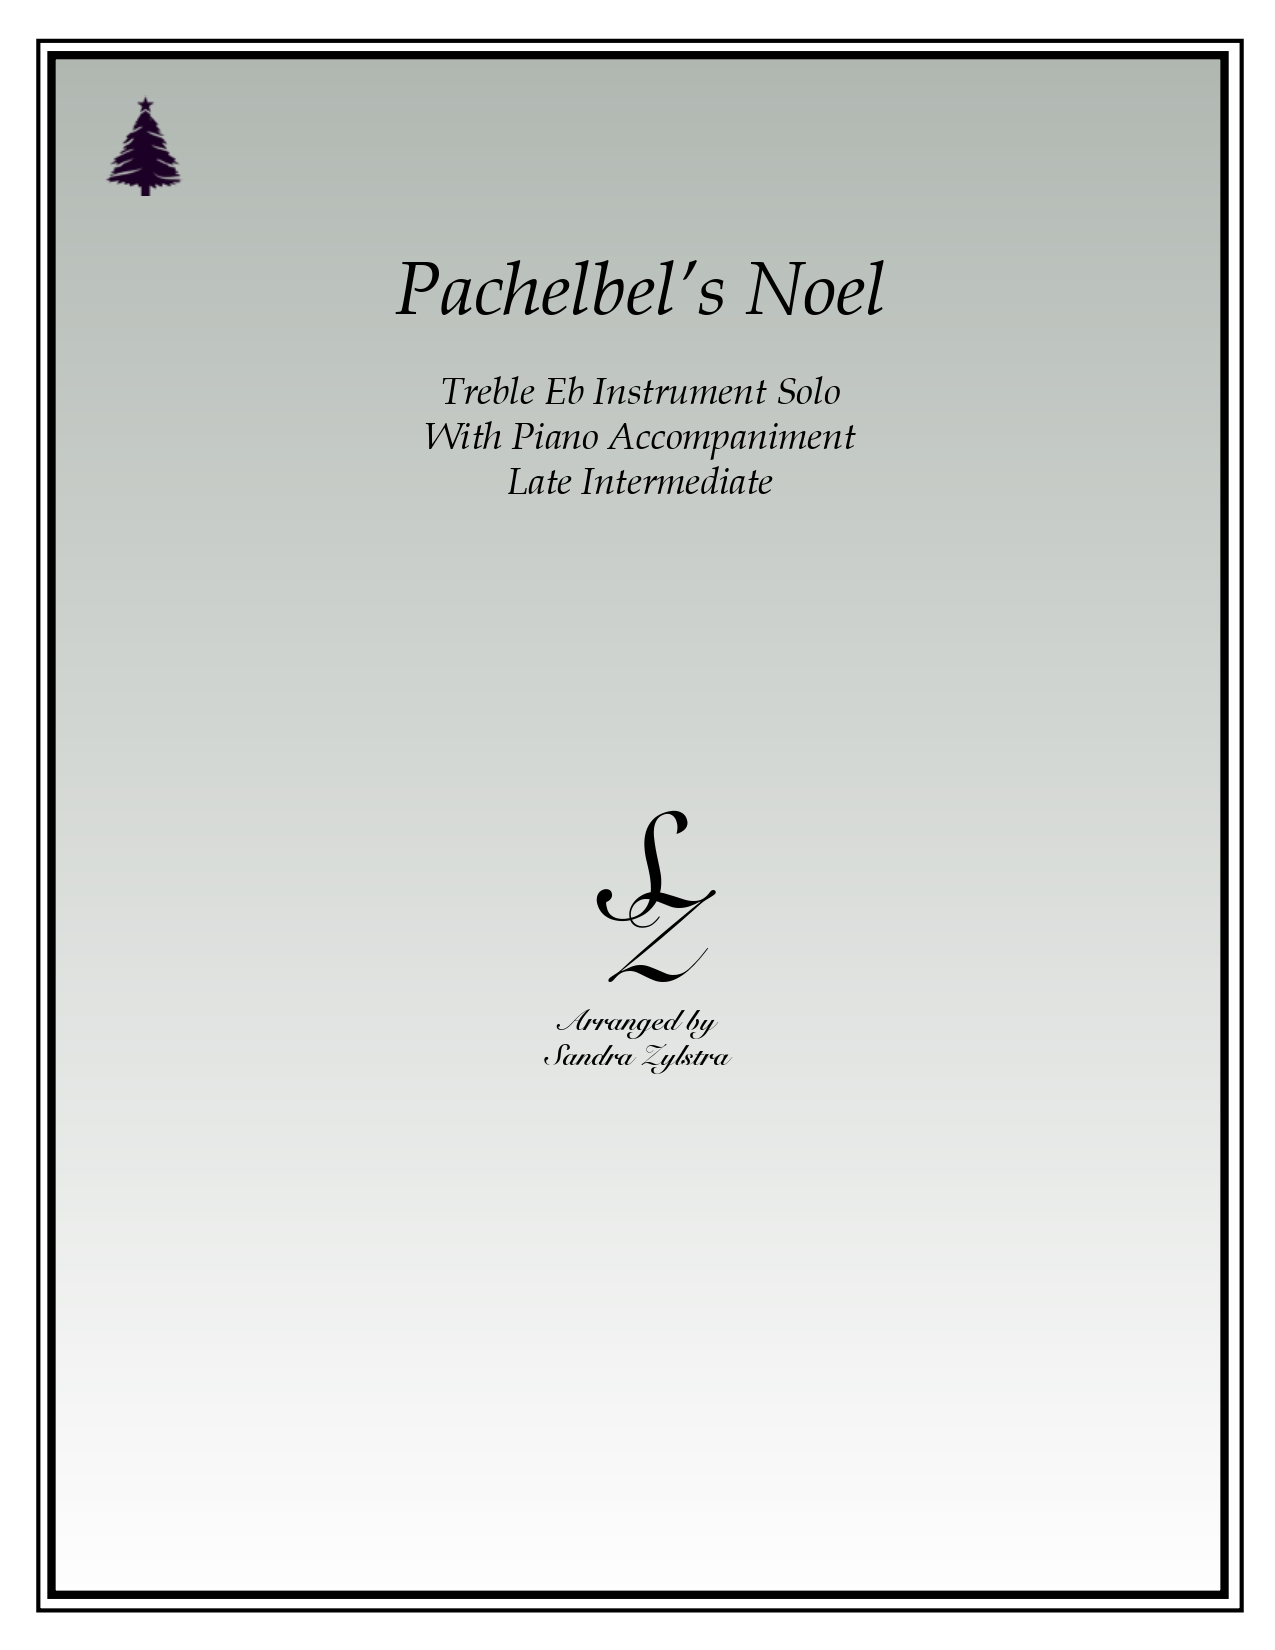 Pachelbels Noel Eb instrument solo part cover page 00011